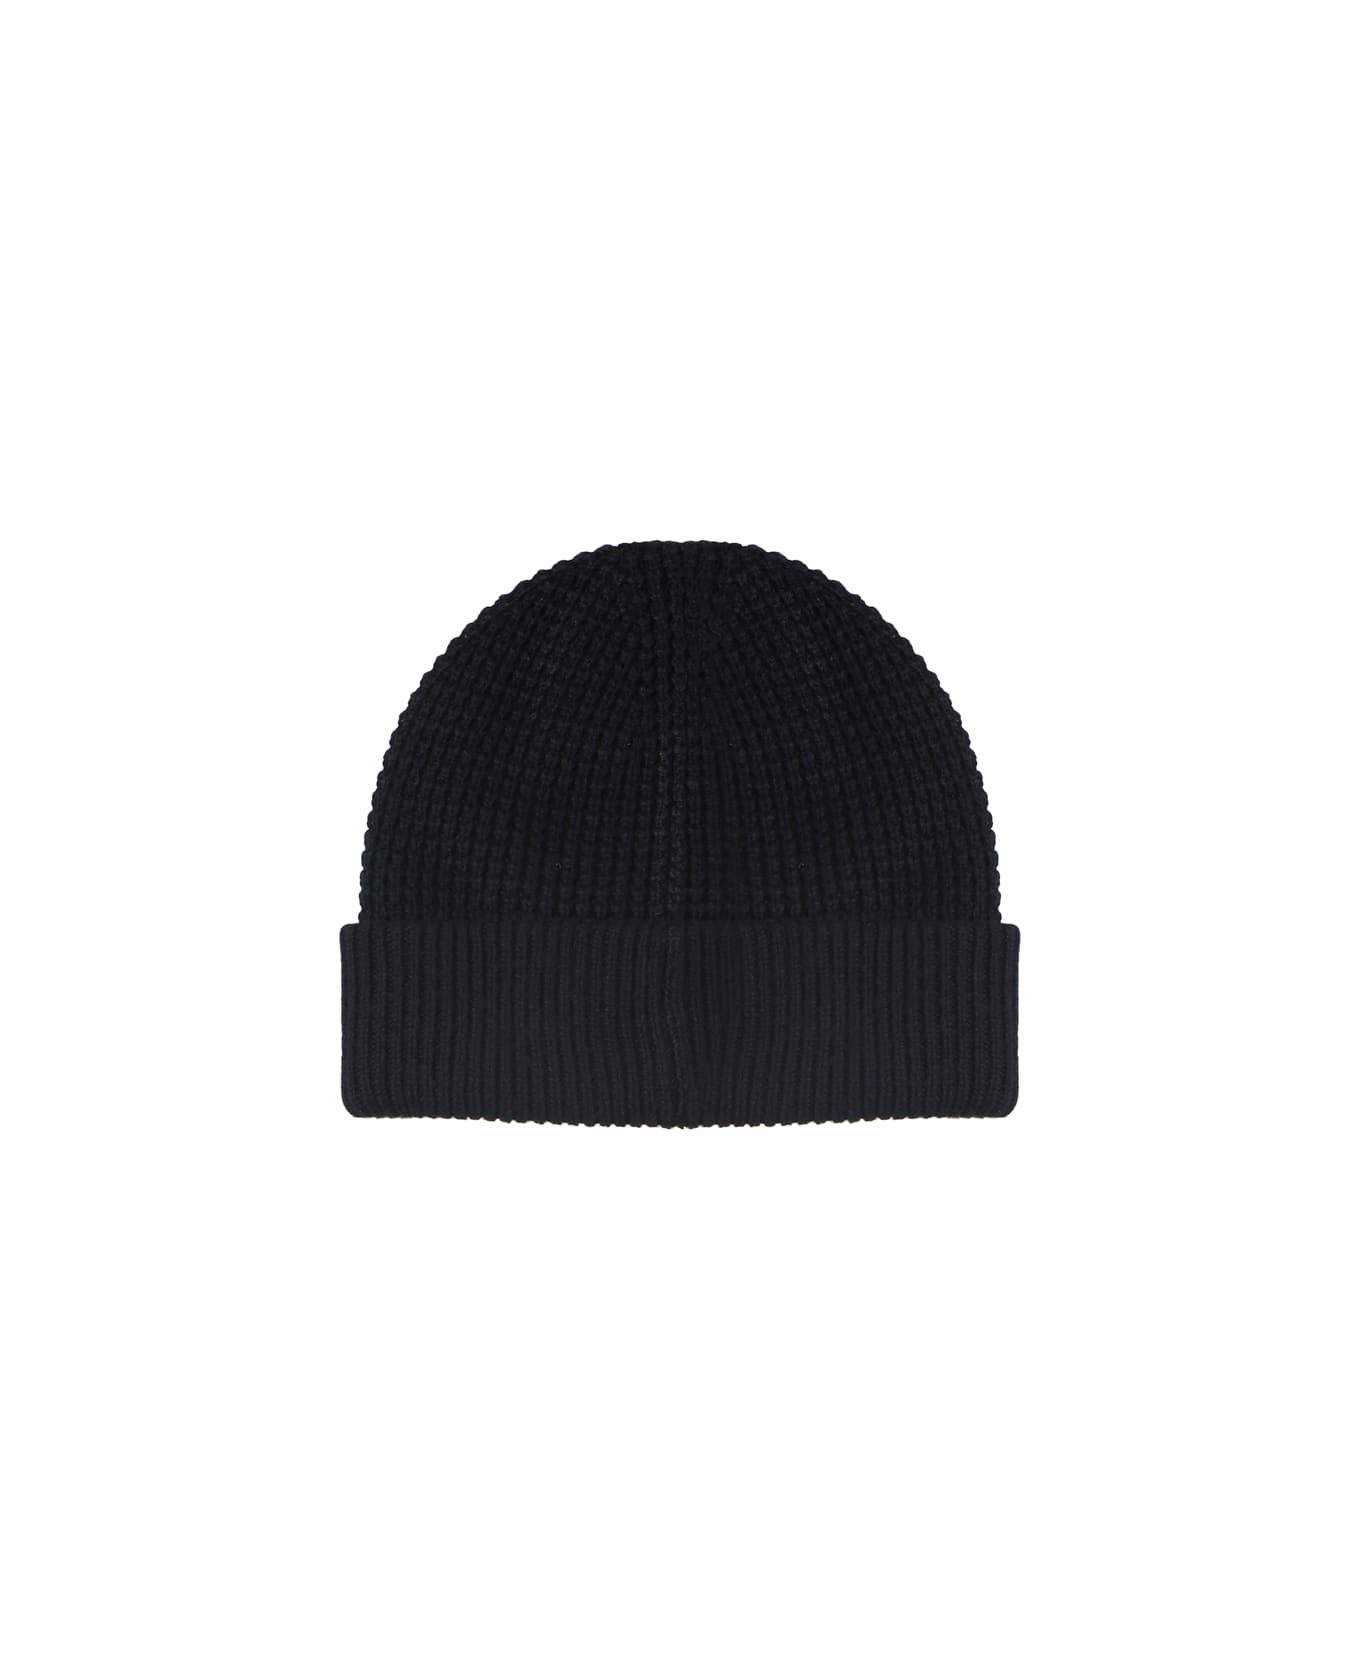 MICHAEL Michael Kors Hat With Logo - Black 帽子